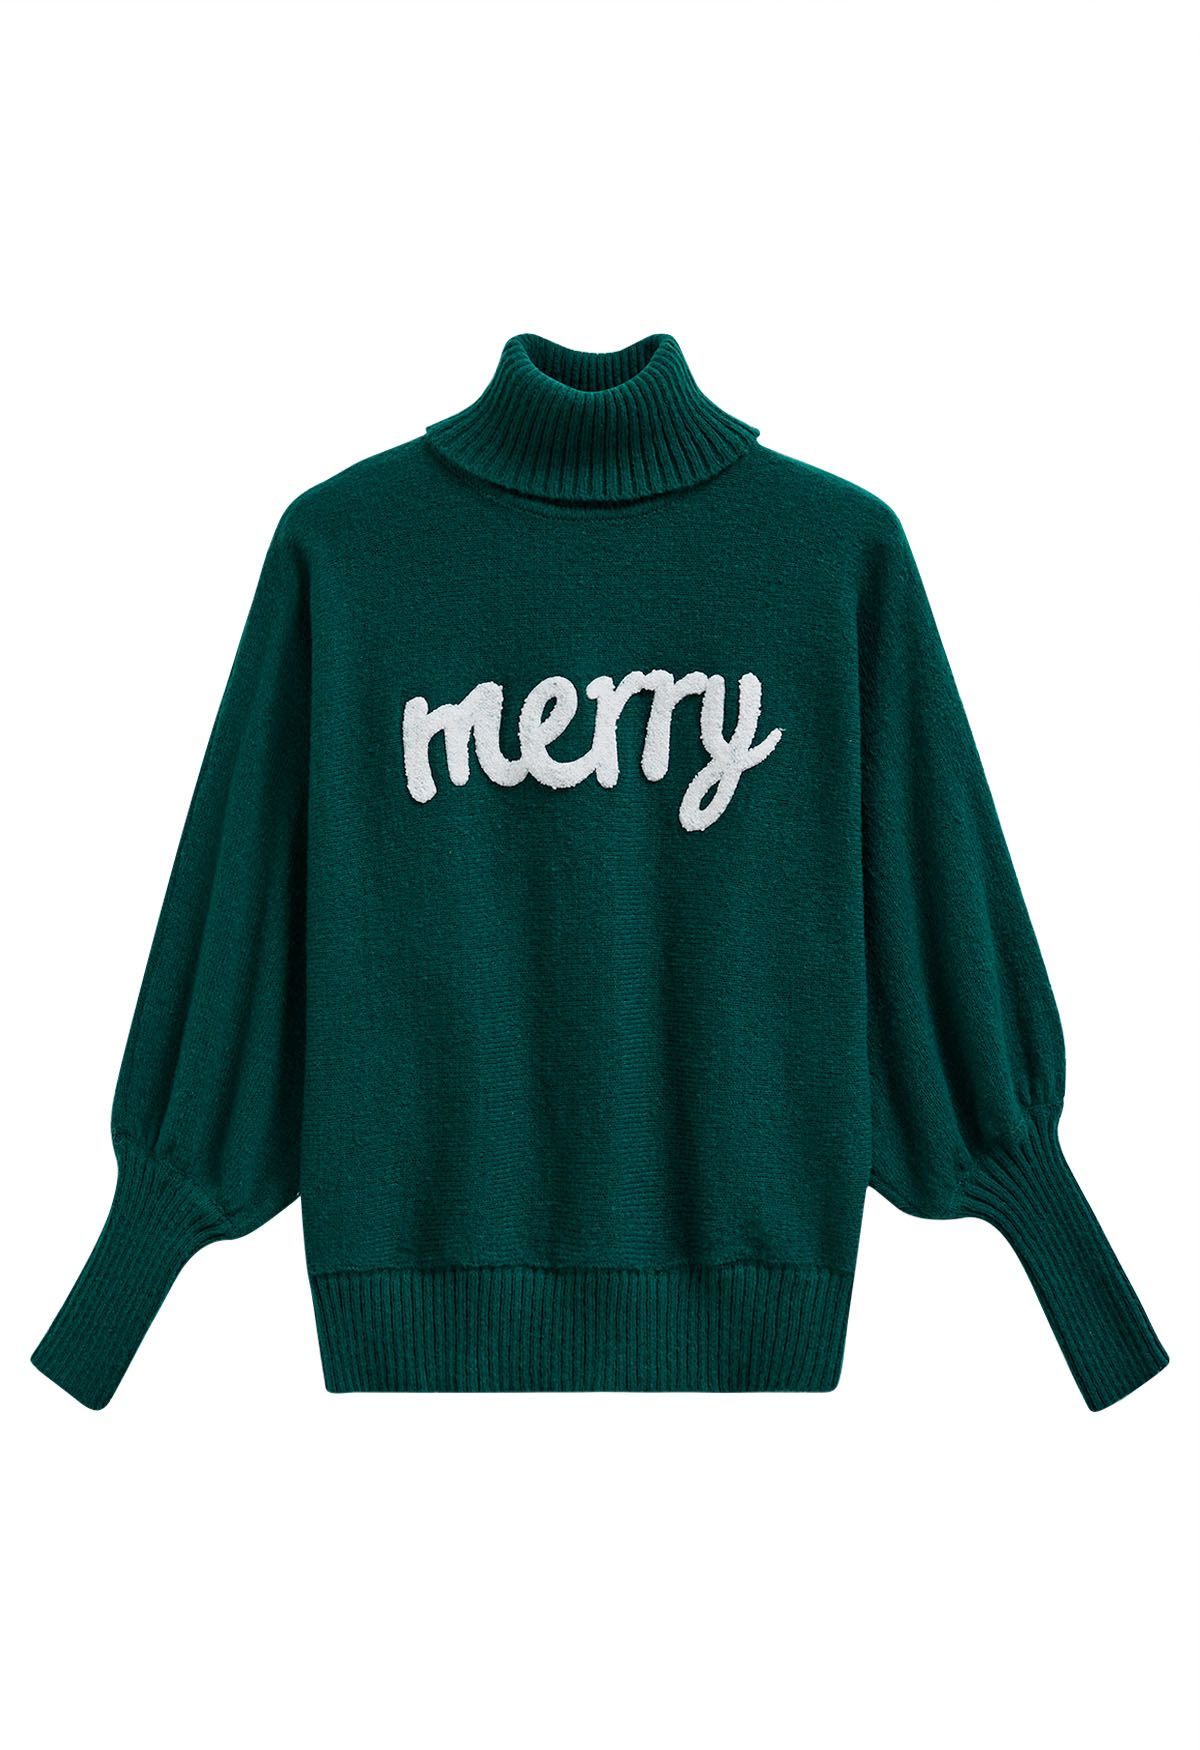 Merry Turtleneck Batwing Sleeve Knit Sweater in Dark Green